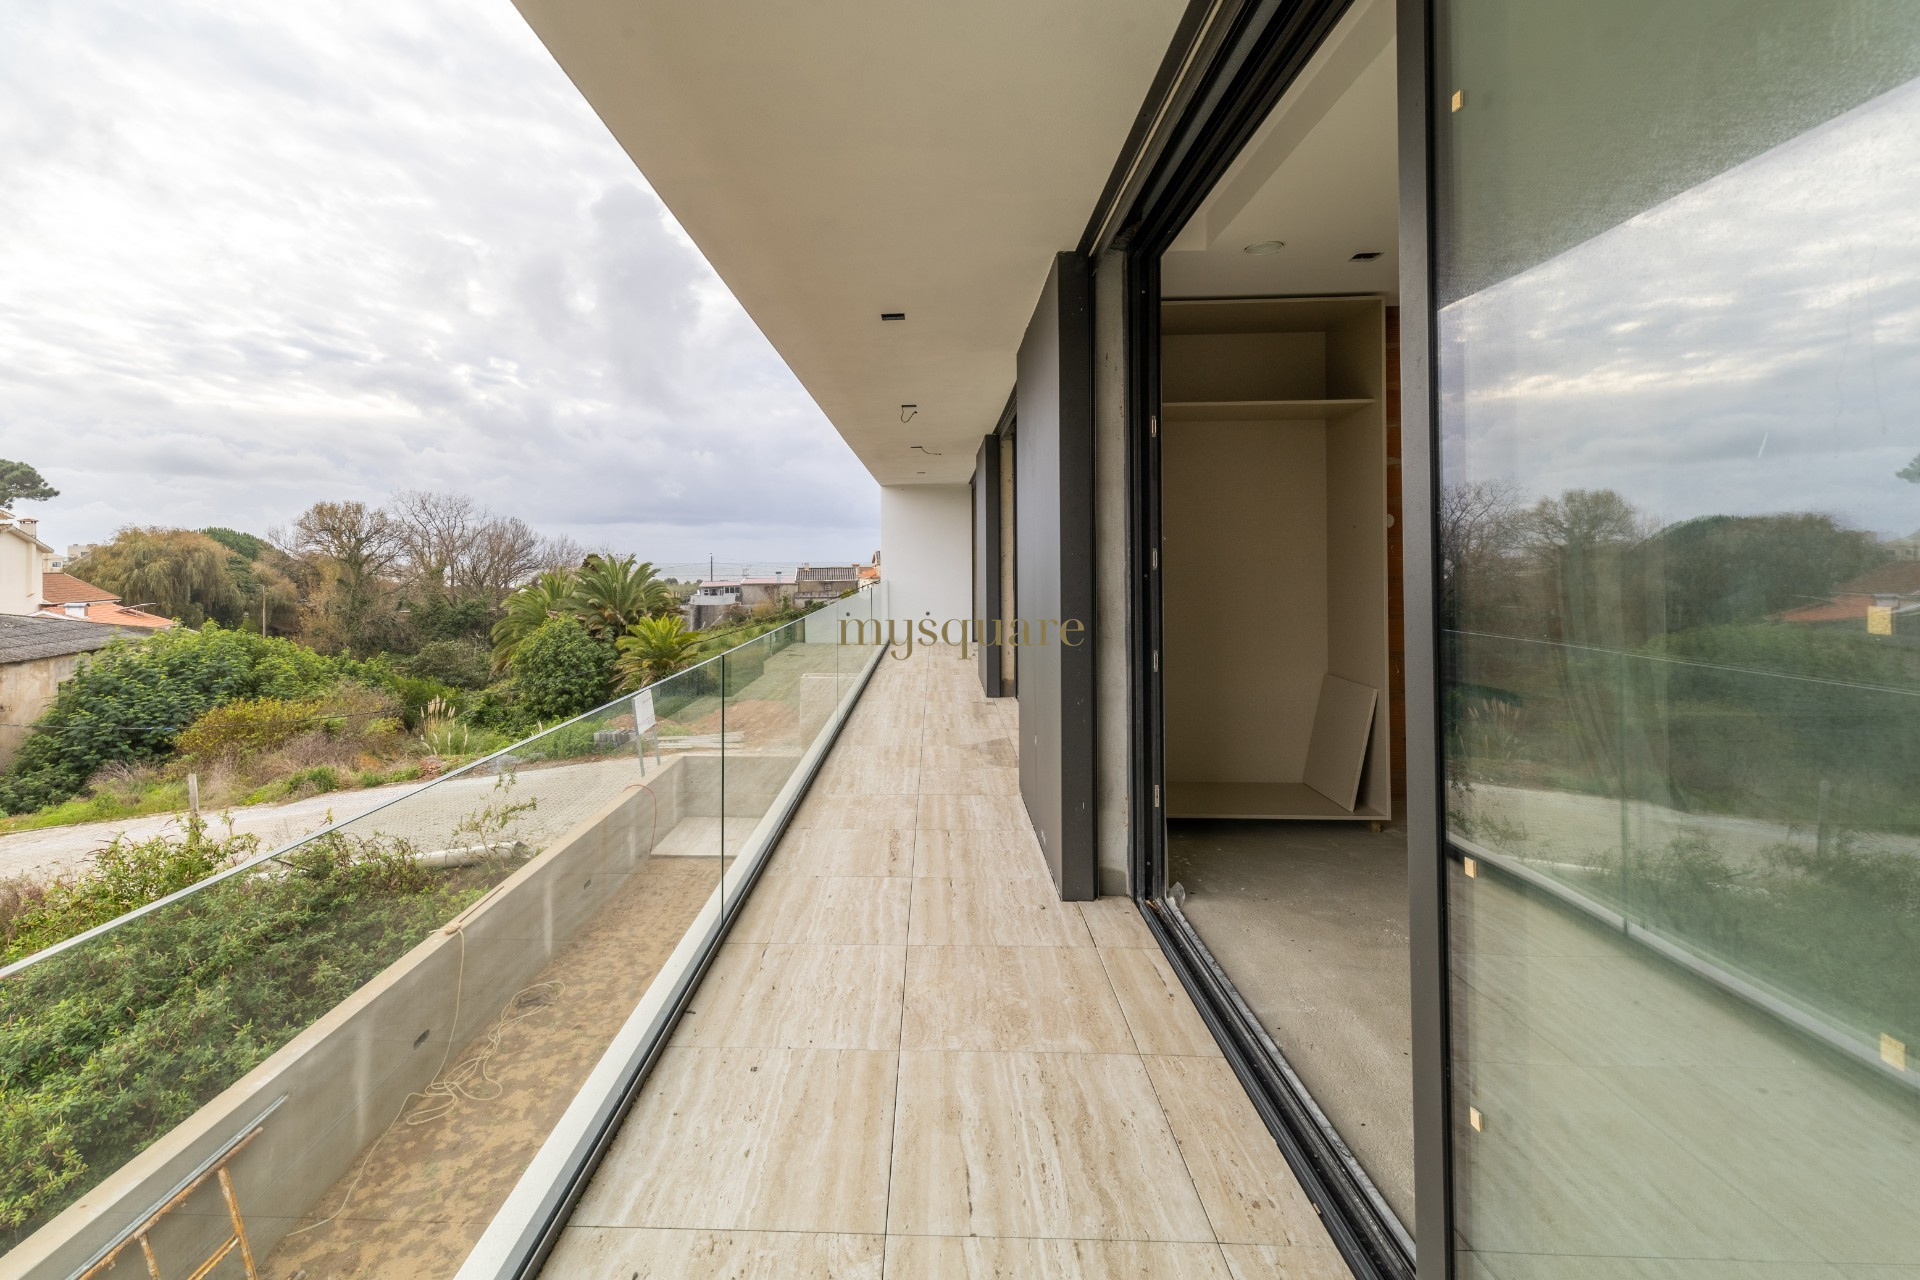 Luxury 4 bedroom villa under construction, 600m from the beach and with sea view, Vila Nova de Gaia